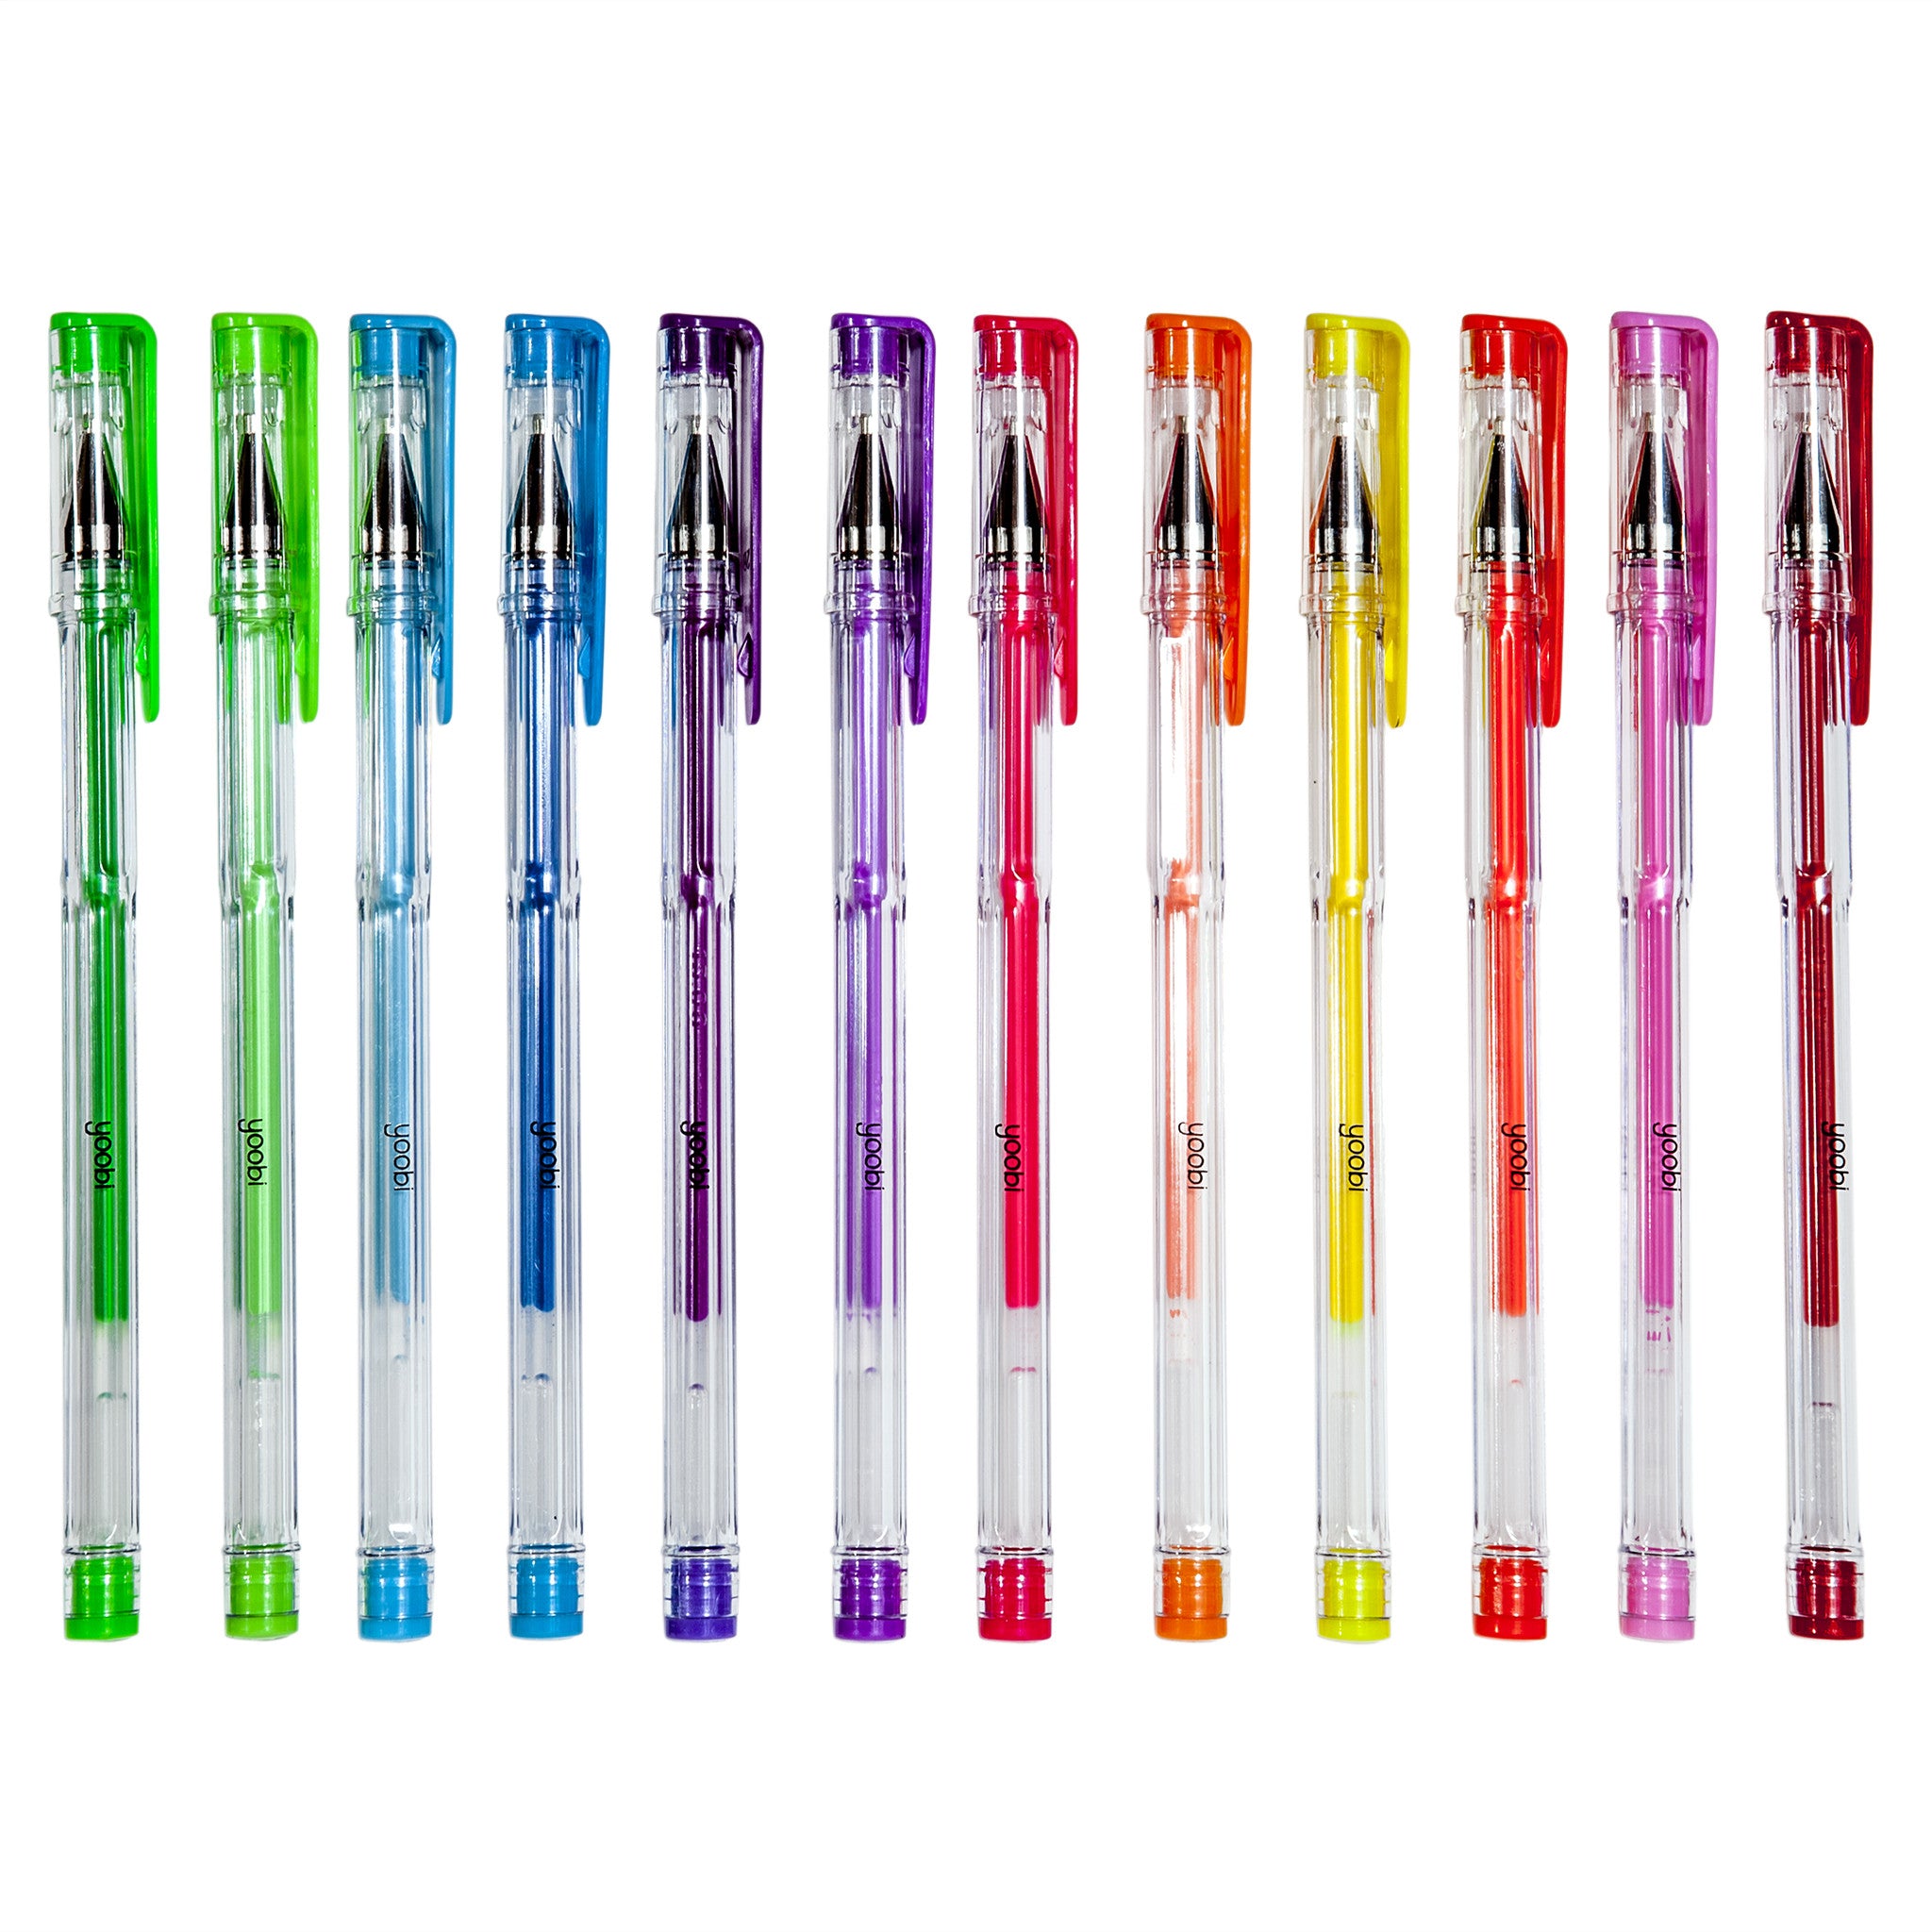 Assorted Gel Pens 12 Pack from Yoobi 